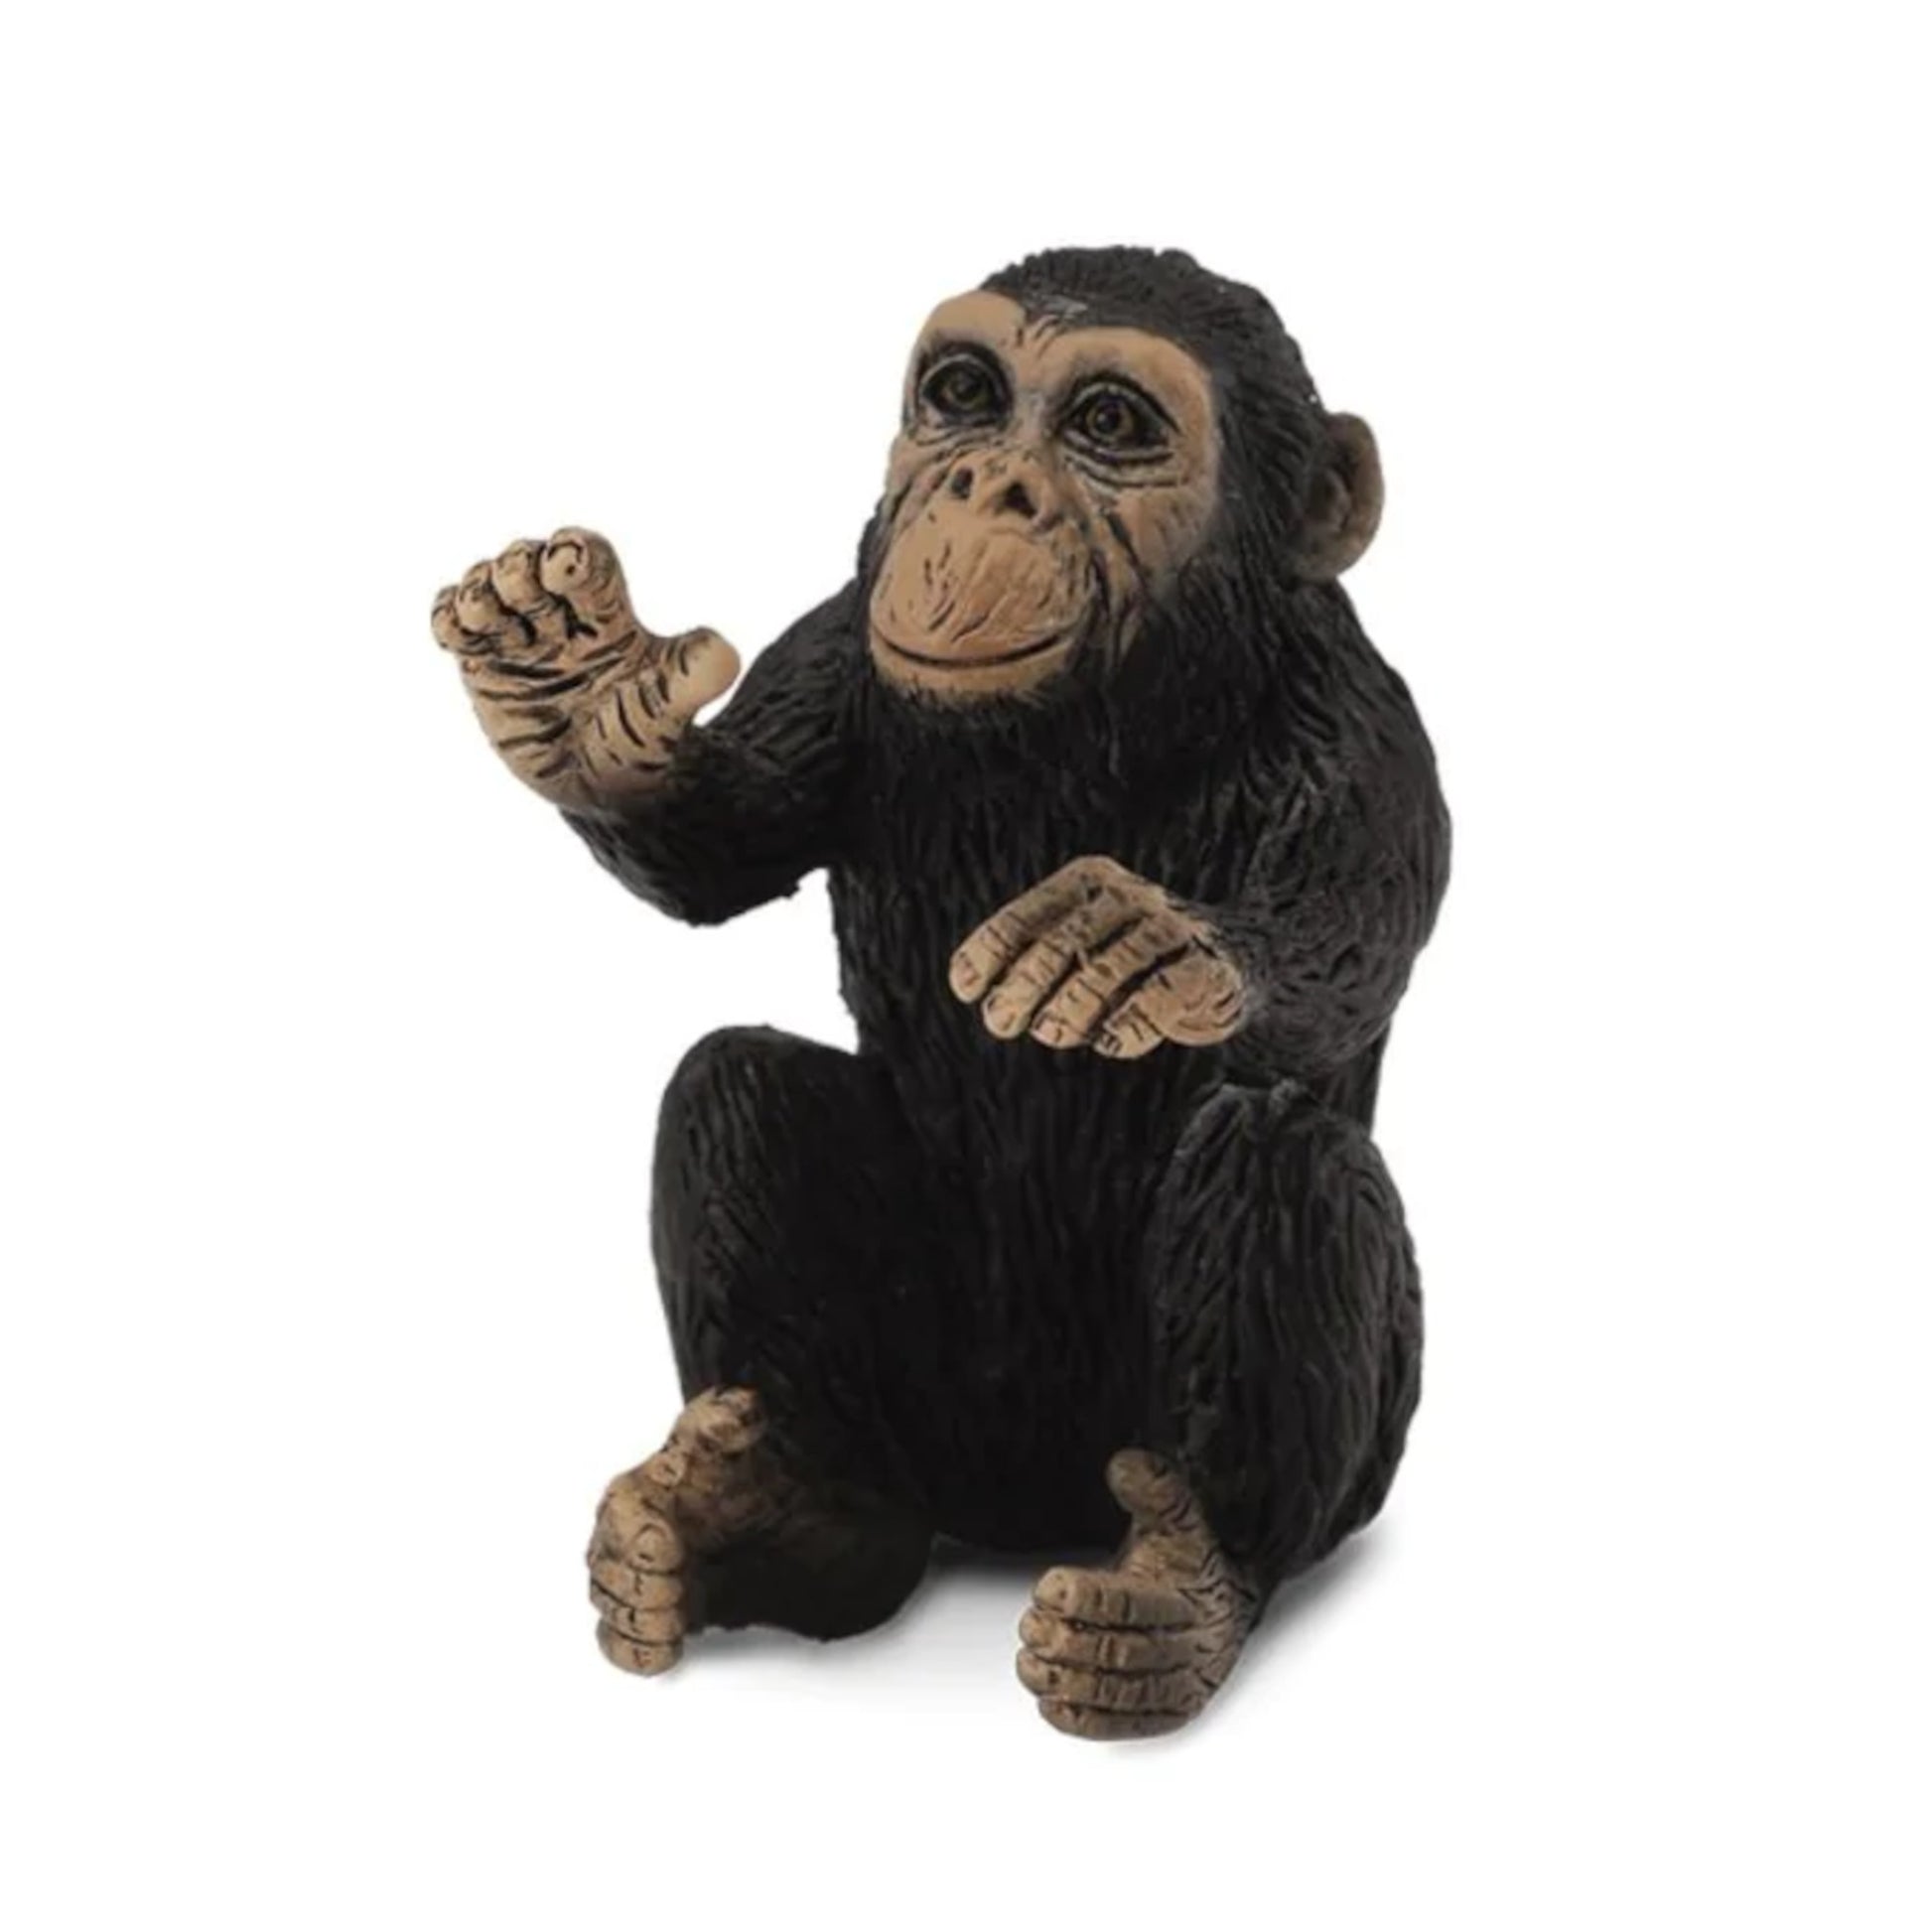 Chimpanzee Baby